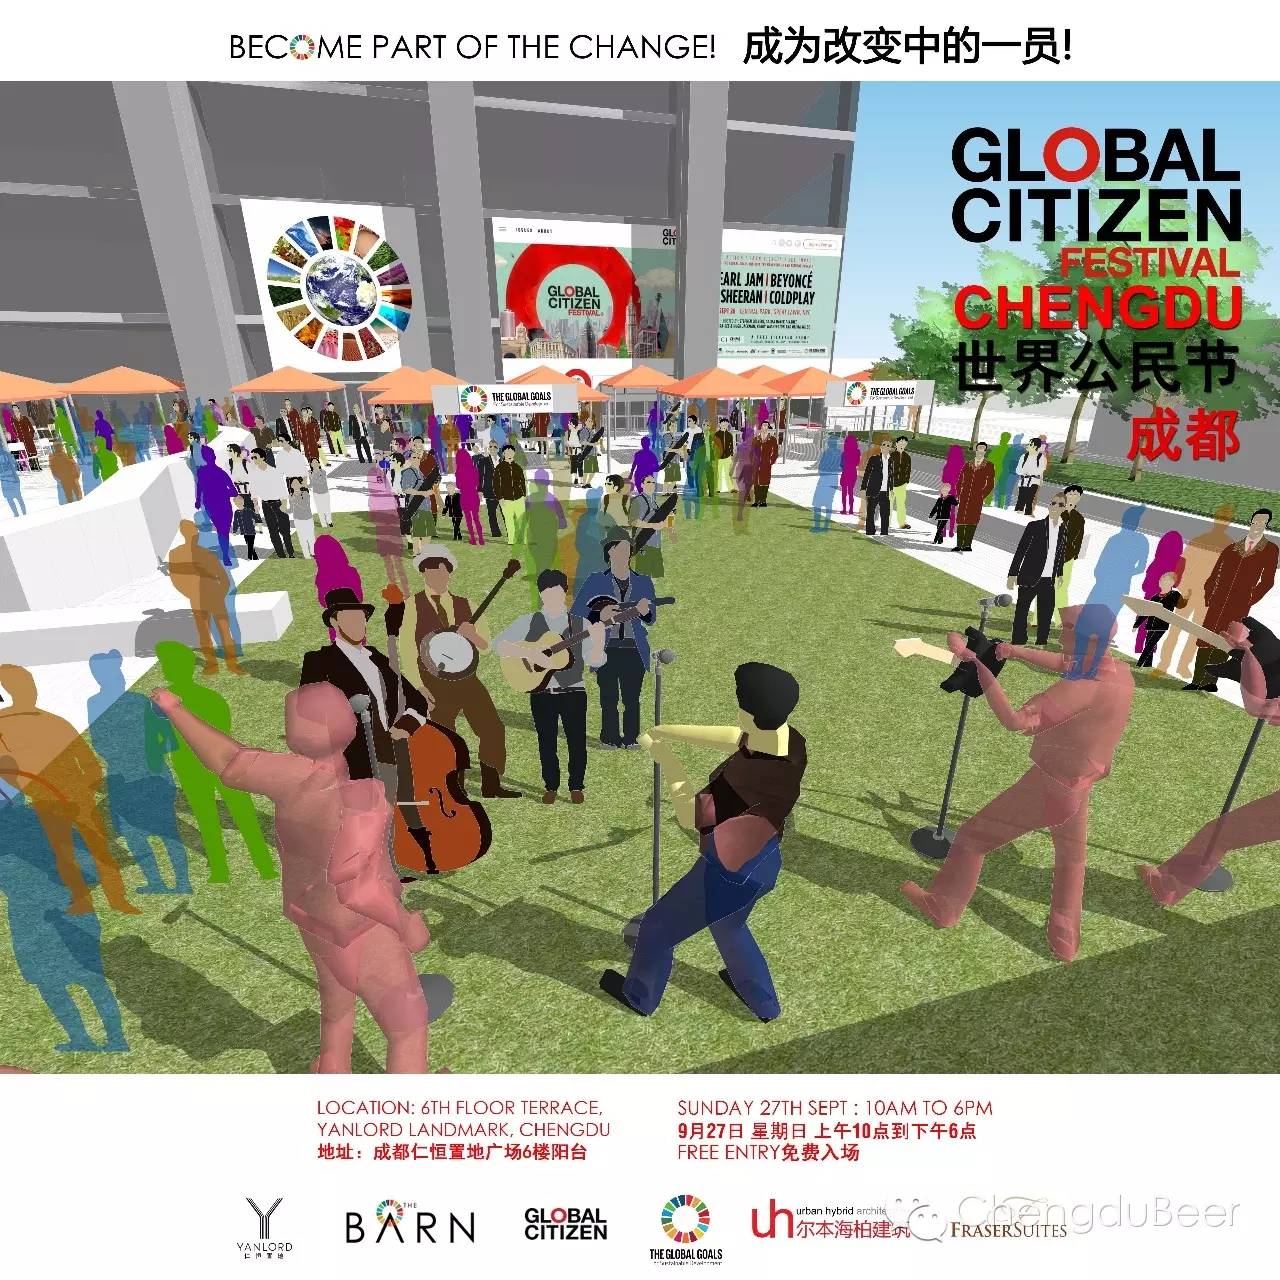 2015 Global Citizen Festival Chengdu